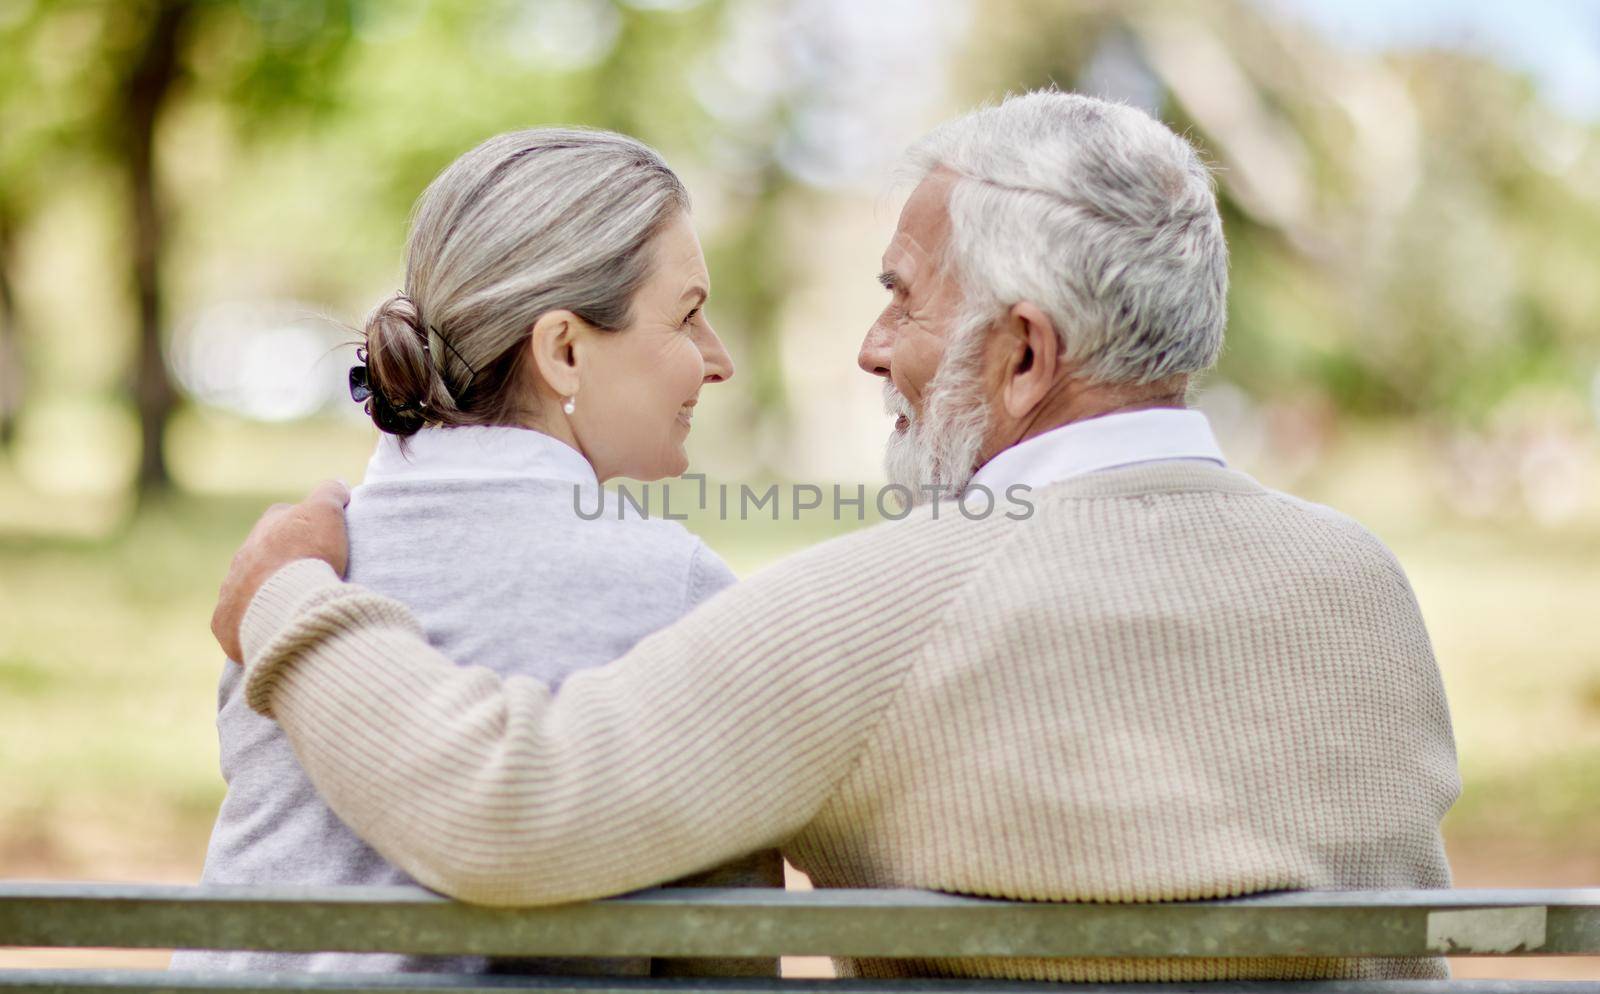 Shot of a senior couple bonding outdoors together.